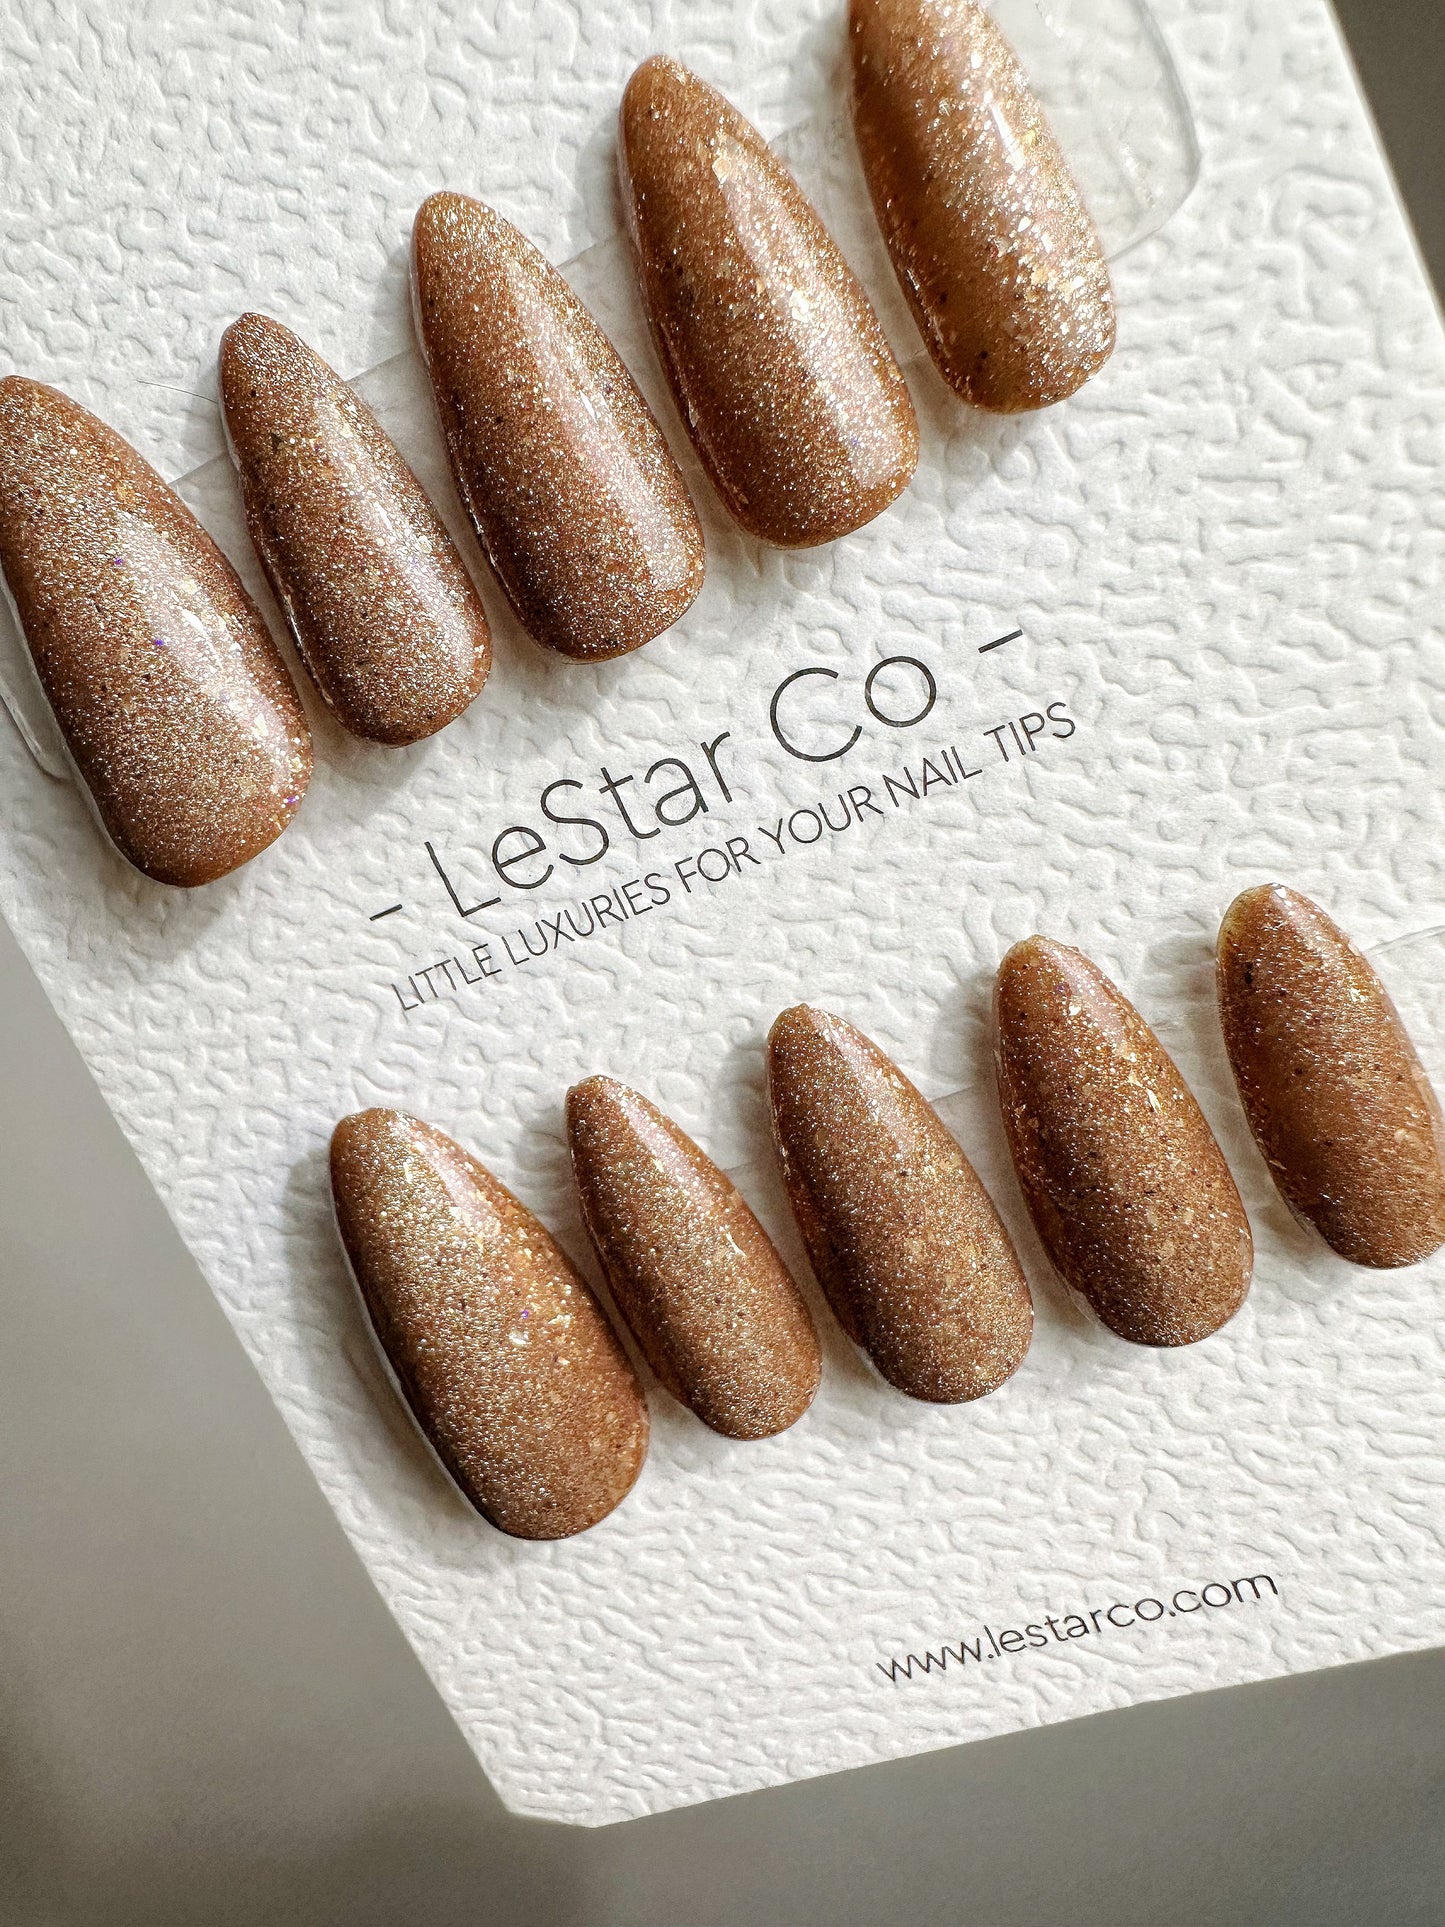 Reusable Cosmic Latte Brown Cat eye | Nails Premium Press on Nails Gel Manicure | Fake Nails | Handmade | Lestarco faux nails 439zz